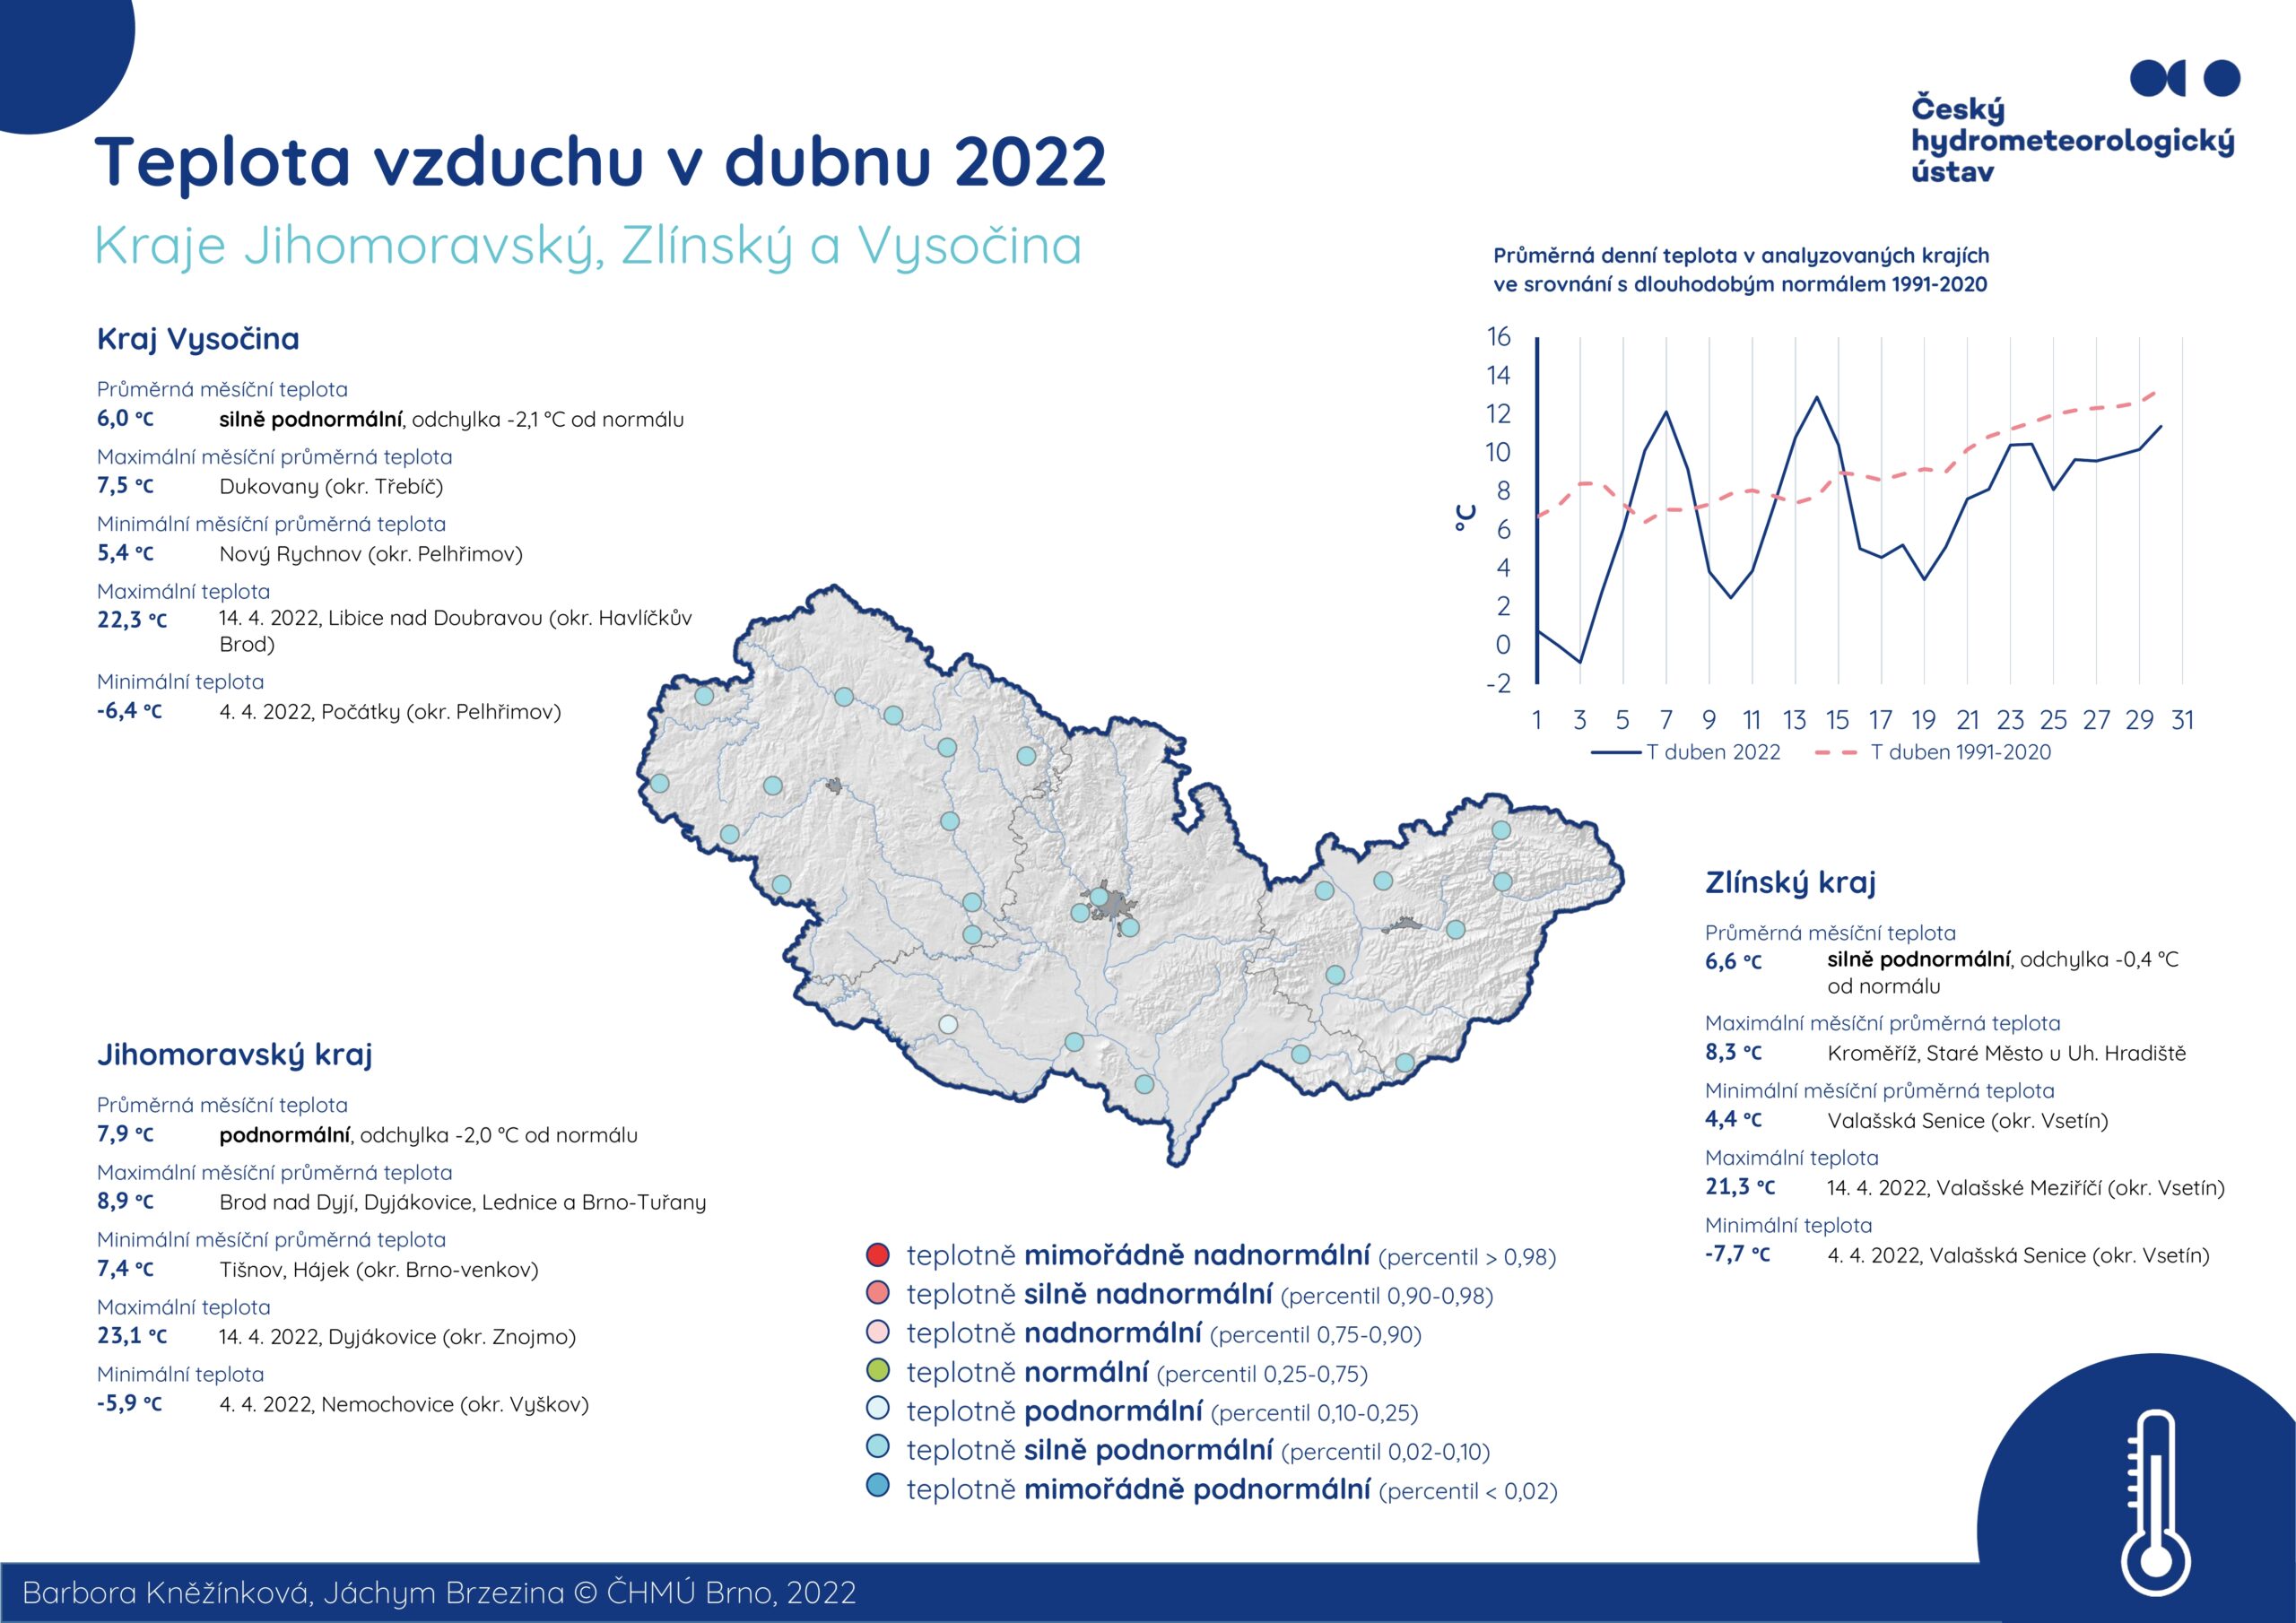 Teplota vzduchu v dubnu 2022 – Jihomoravský kraj, Zlínský kraj a Kraj Vysočina1 min čtení